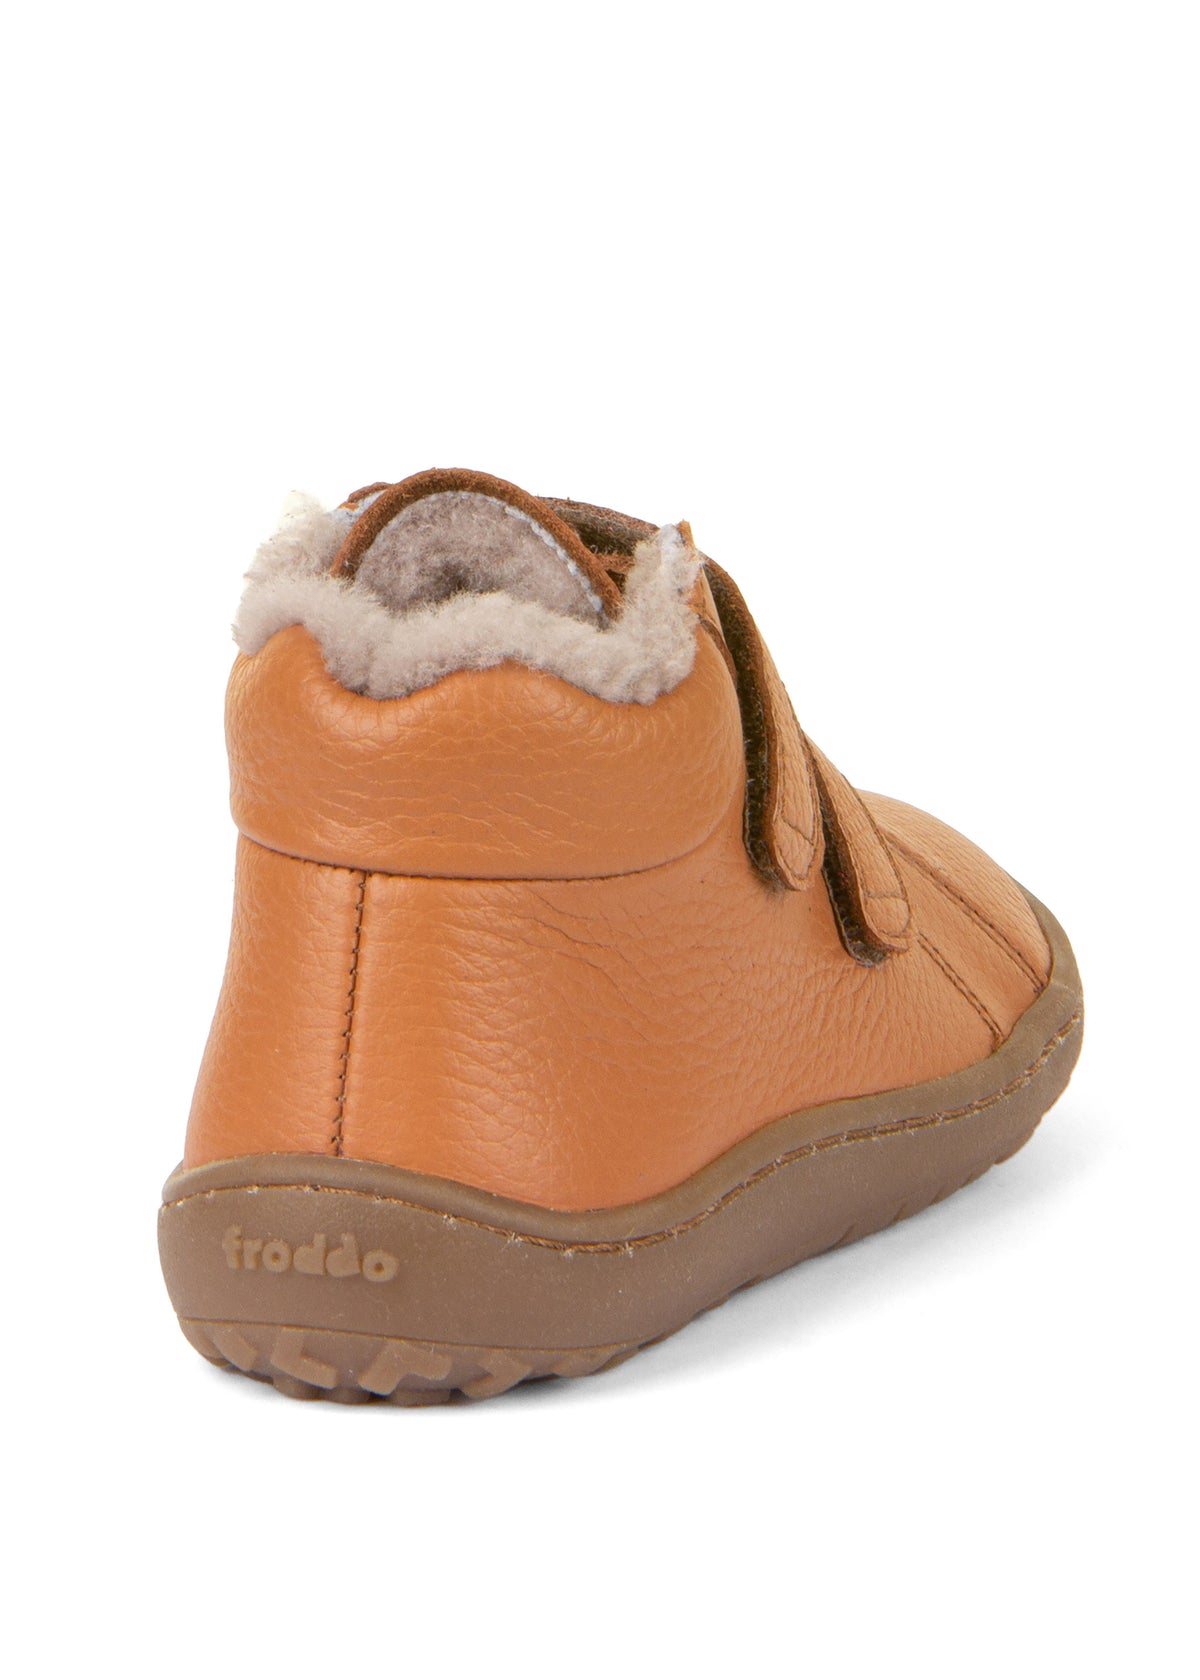 Children's barefoot boots, winter shoes - Winter Furry, cognac brown